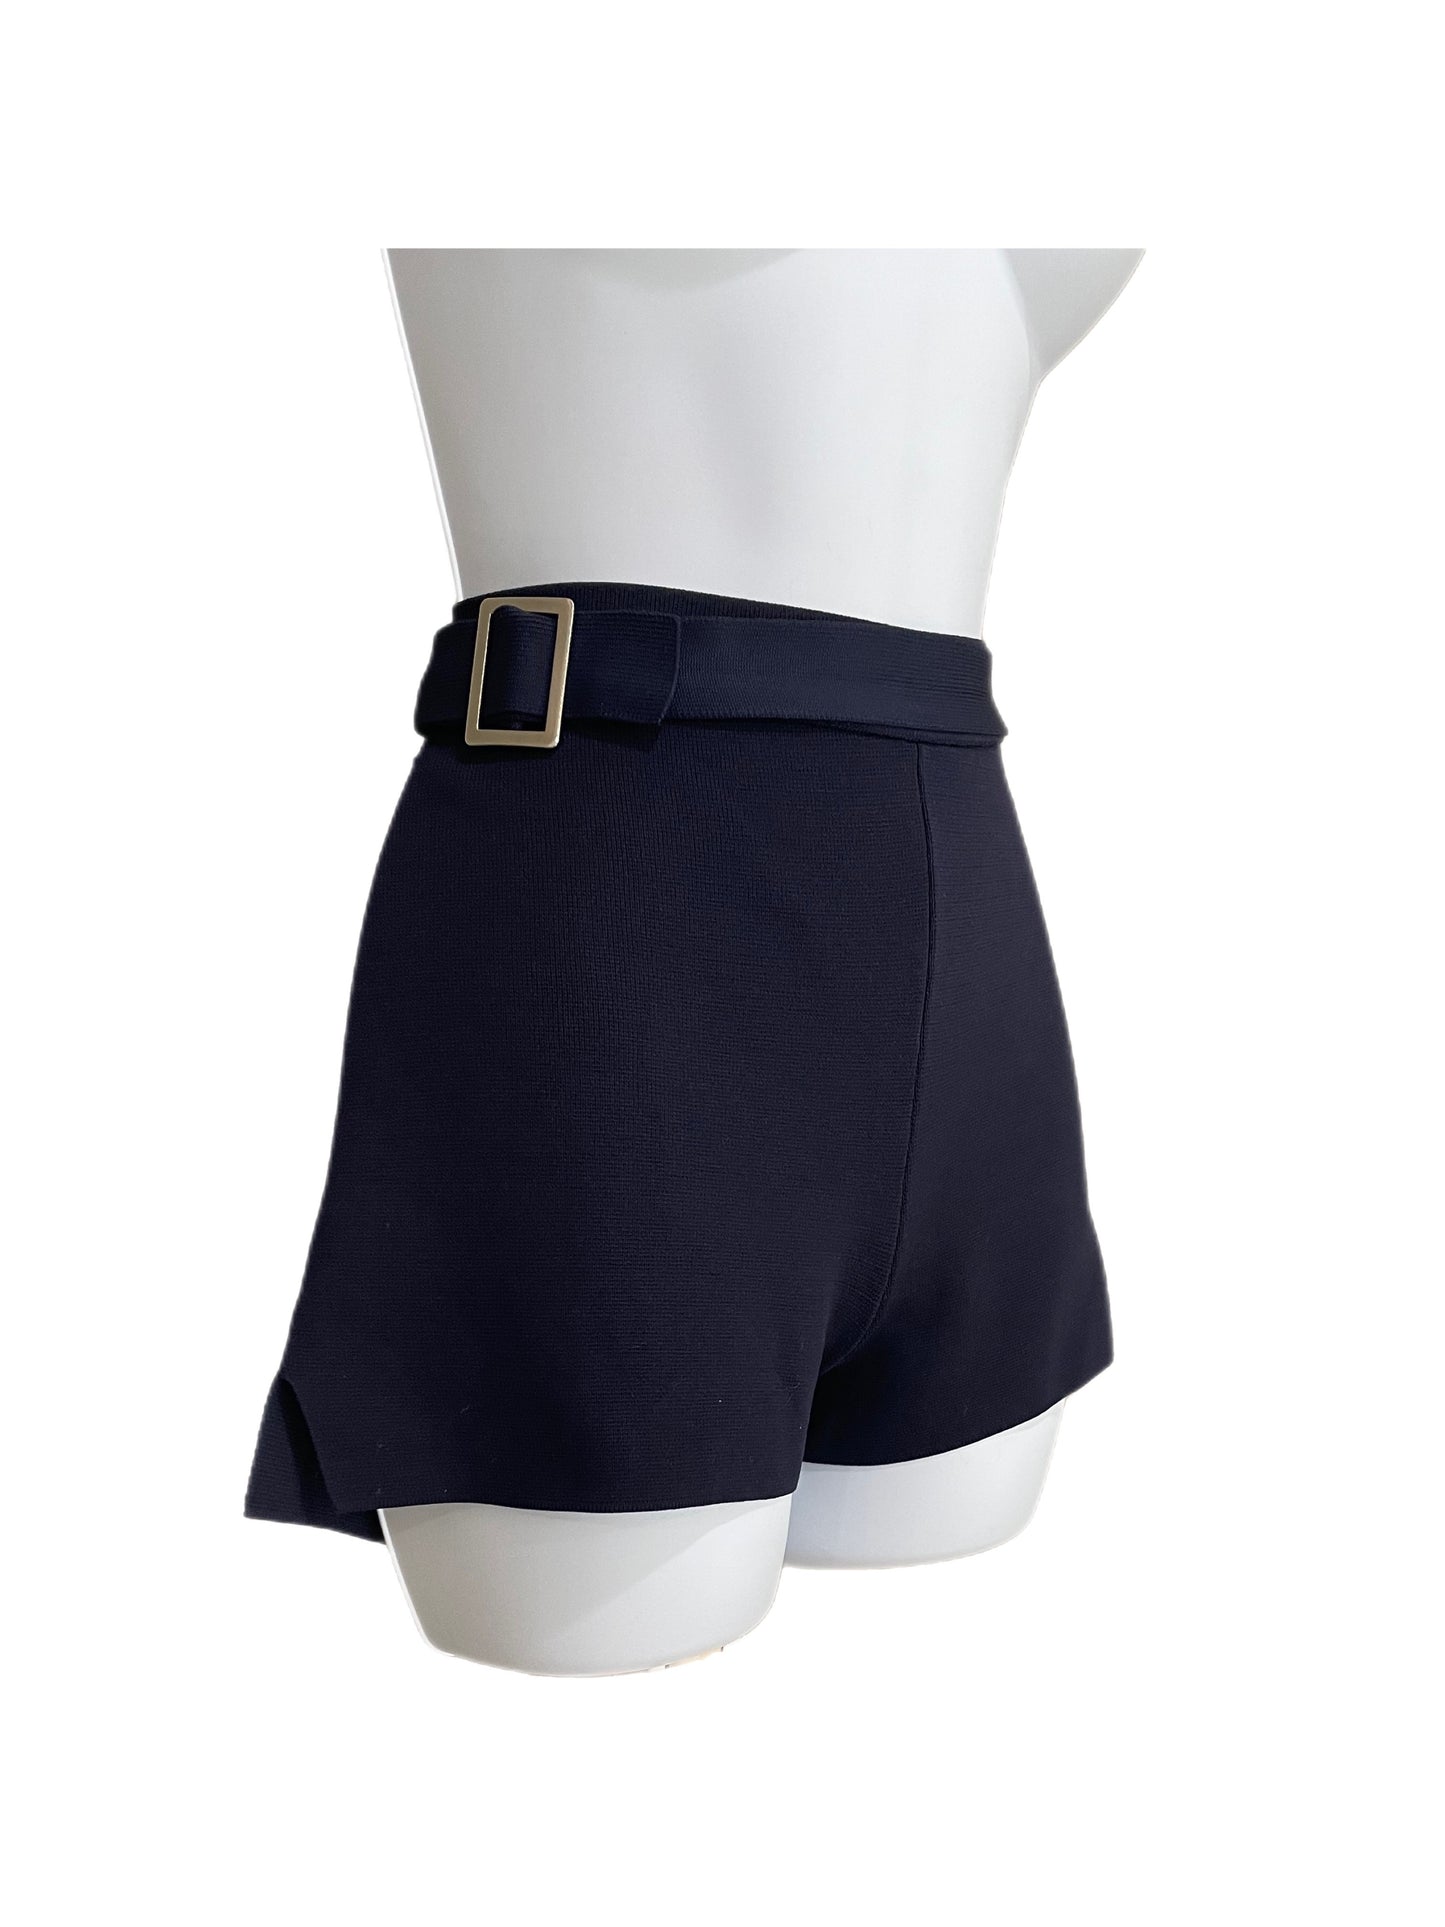 Shorts - Navy Knit-w/Belt Buckle By Zara